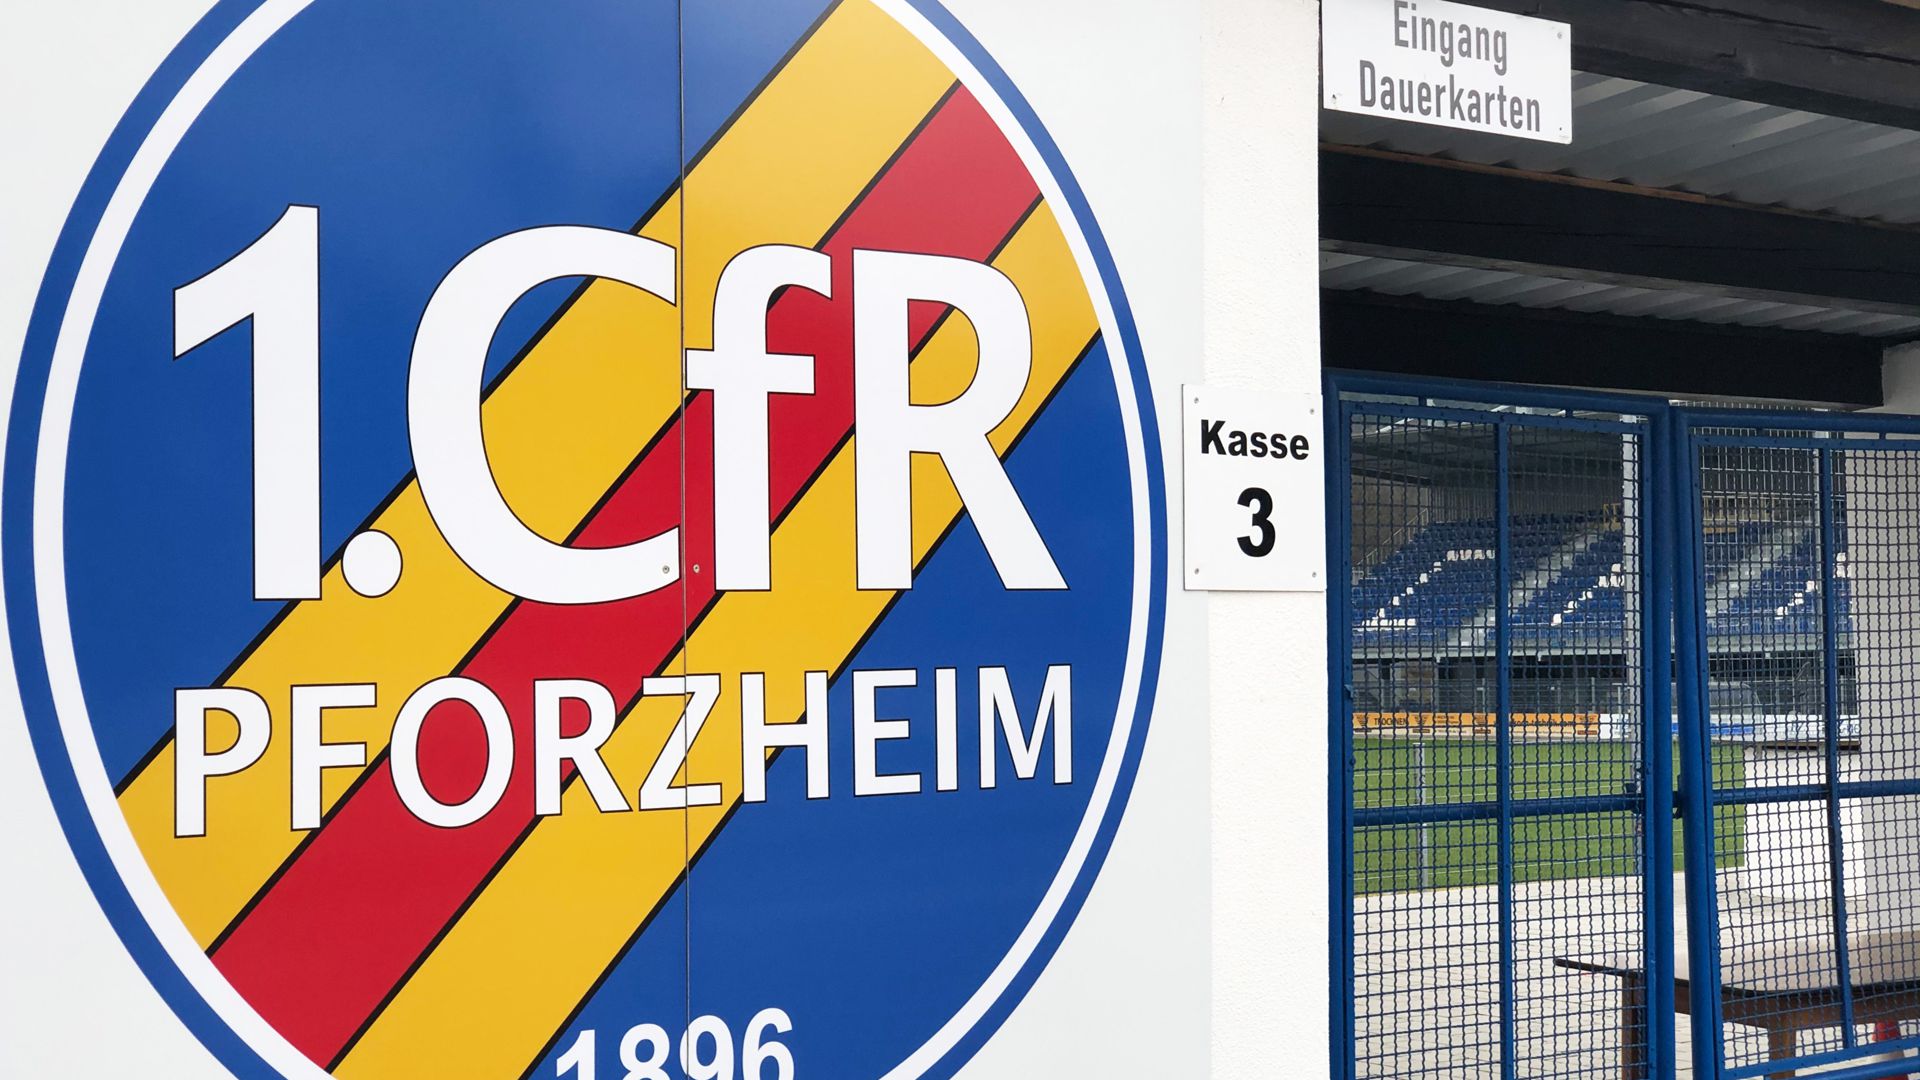 Stadion_CfR Pforzheim_Corona_verschlossene Türen8